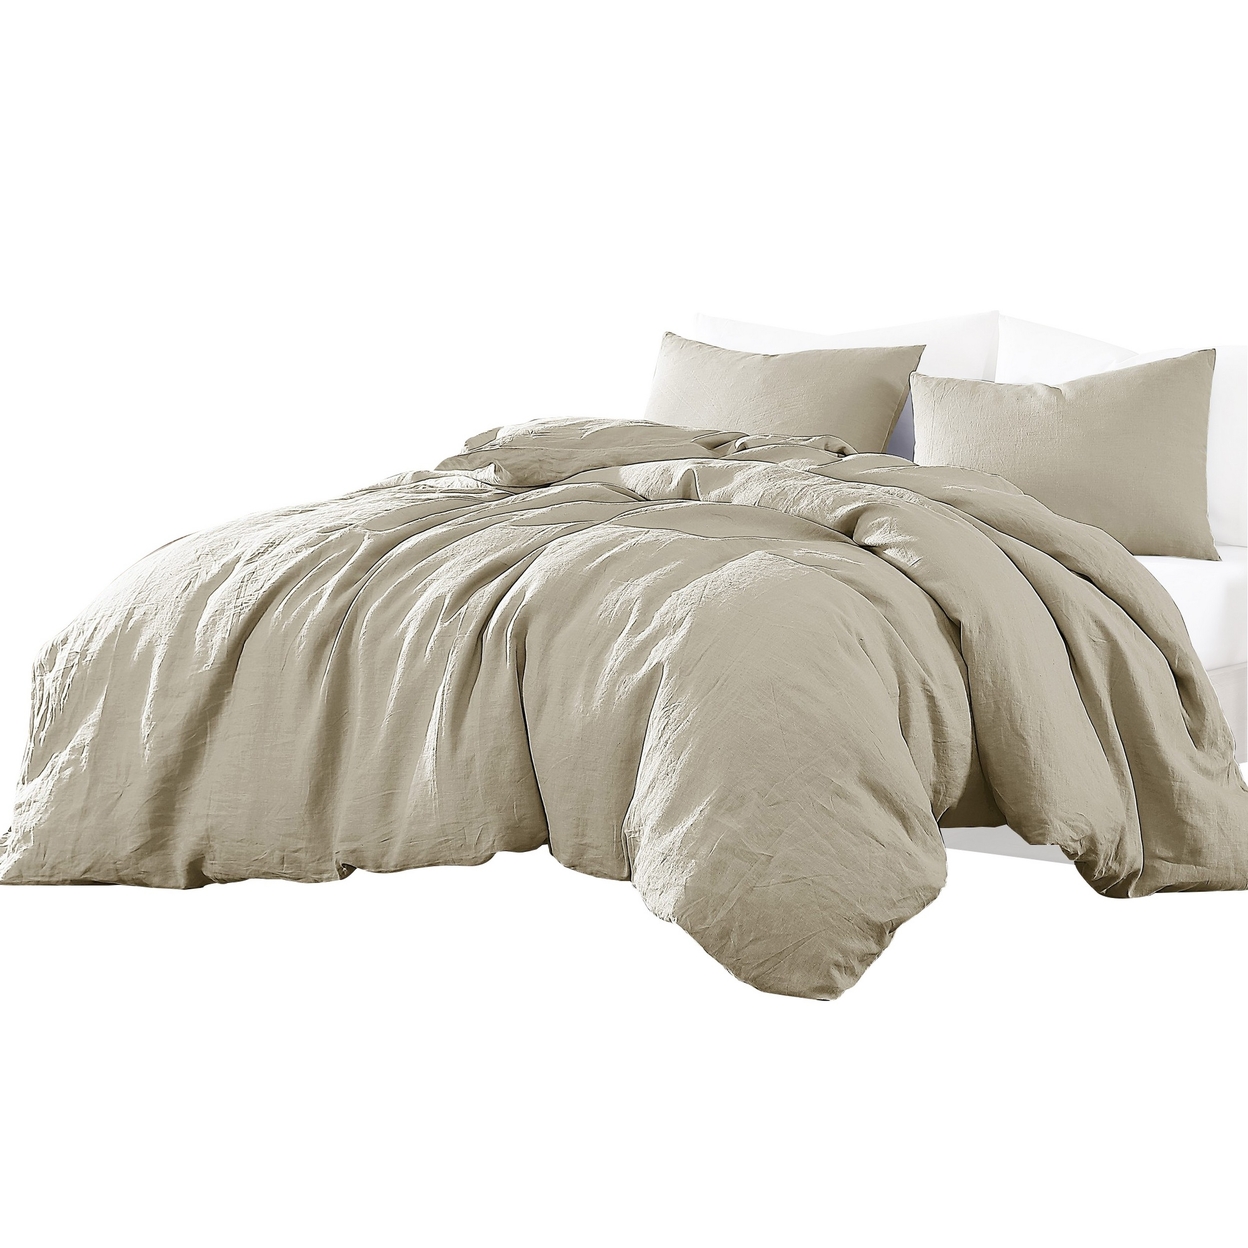 Edge 4 Piece King Size Duvet Comforter Set, Washed Linen, Oatmeal Beige - Saltoro Sherpi